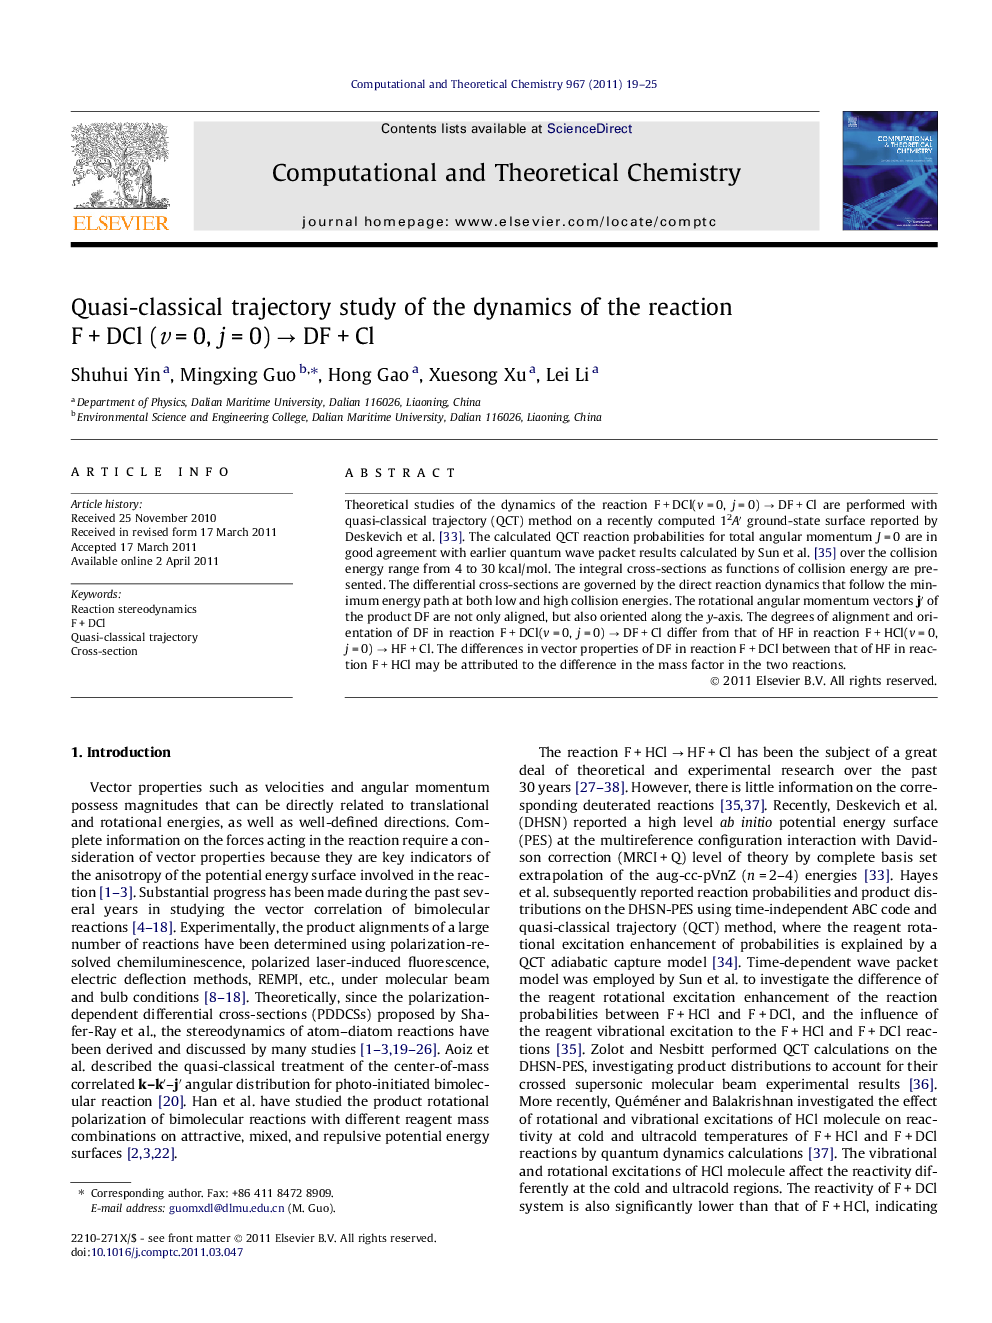 Quasi-classical trajectory study of the dynamics of the reaction FÂ +Â DCl (vÂ =Â 0, jÂ =Â 0)Â âÂ DFÂ +Â Cl